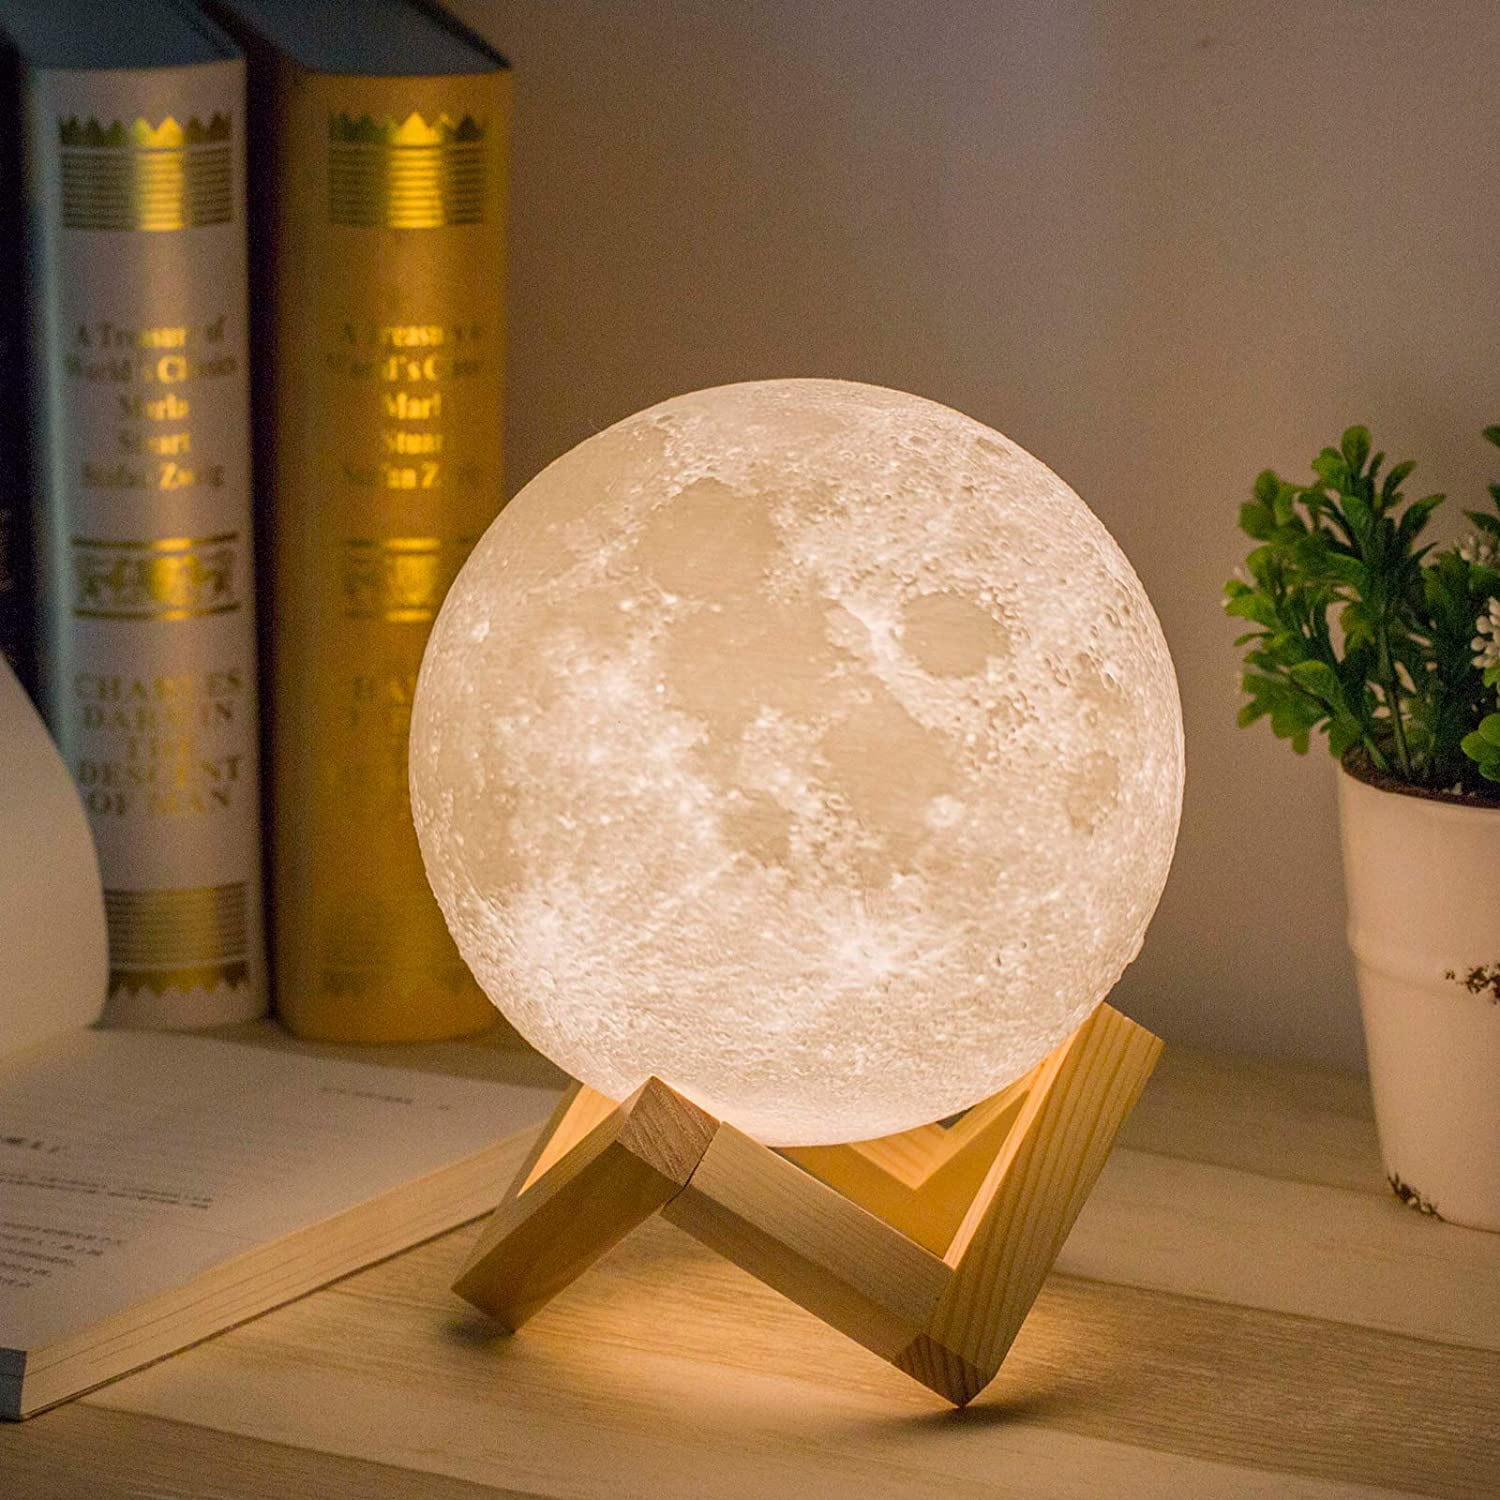 Mum To Daughter Christmas Gift Romantic Moon Night Light 3D Printed Lunar Lamp 